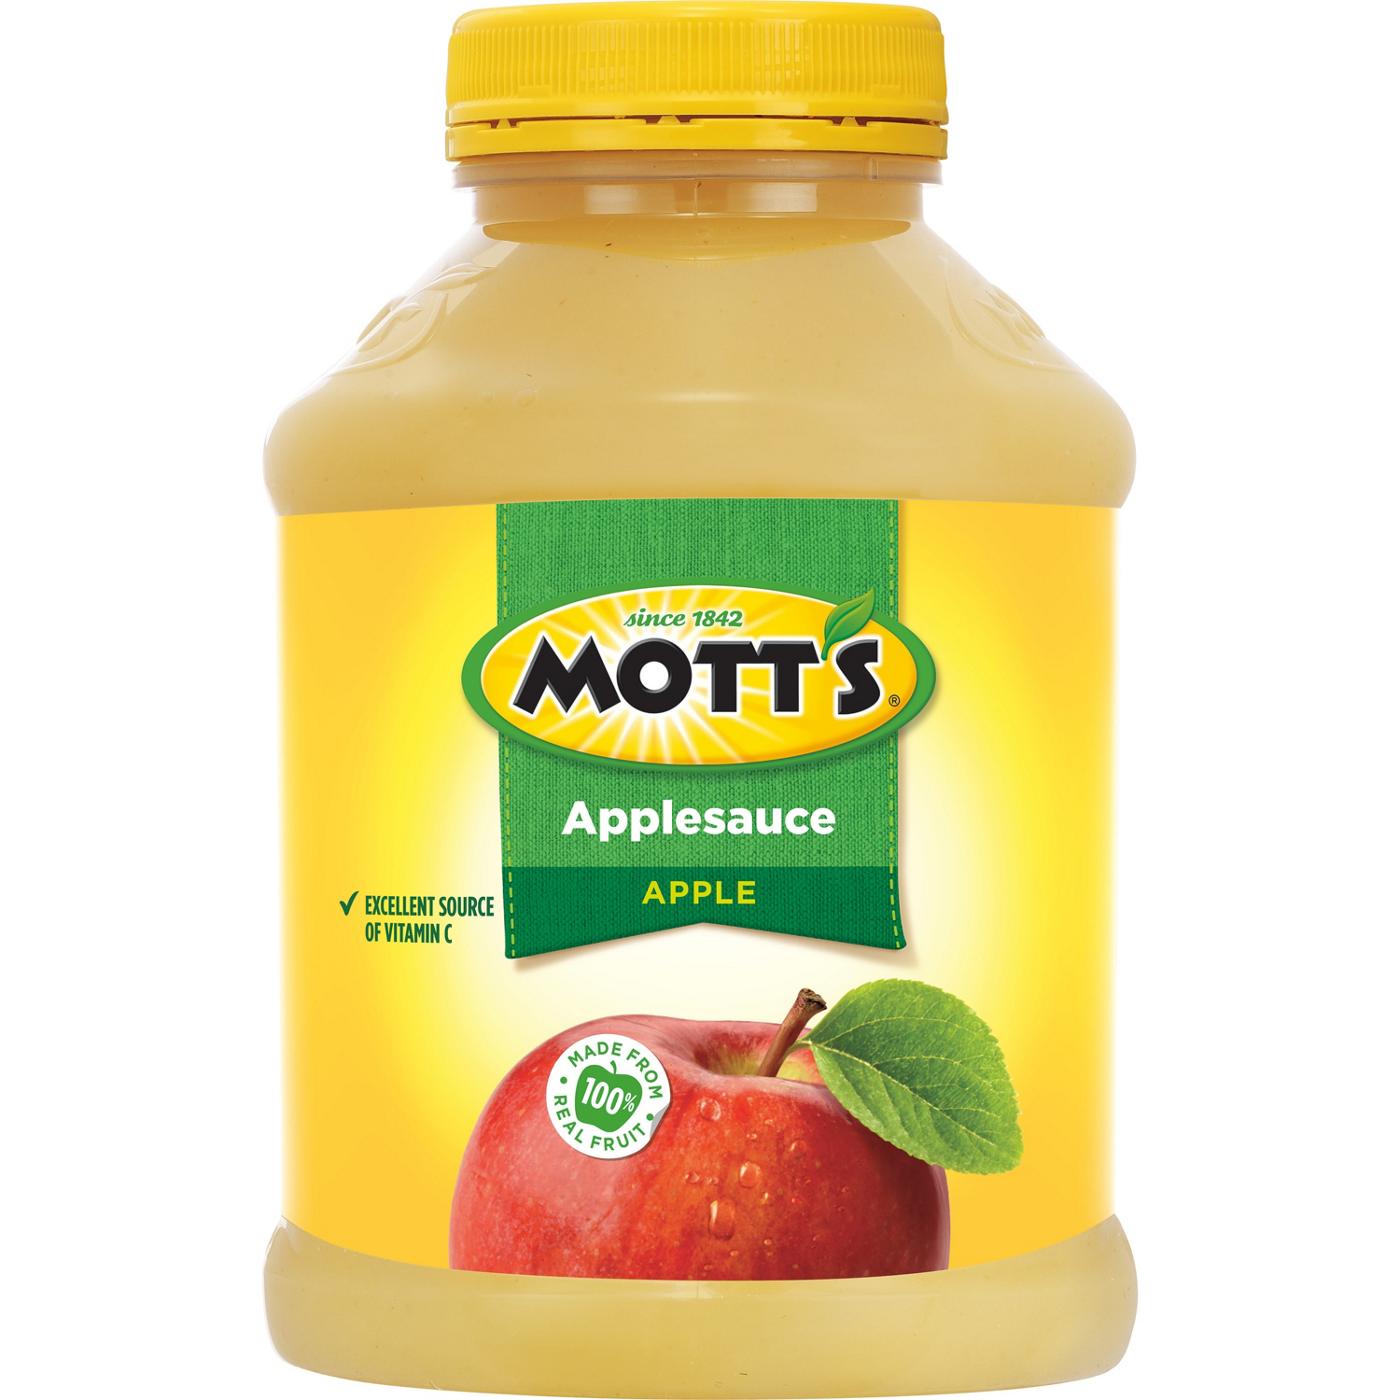 Mott's Original Applesauce; image 1 of 6